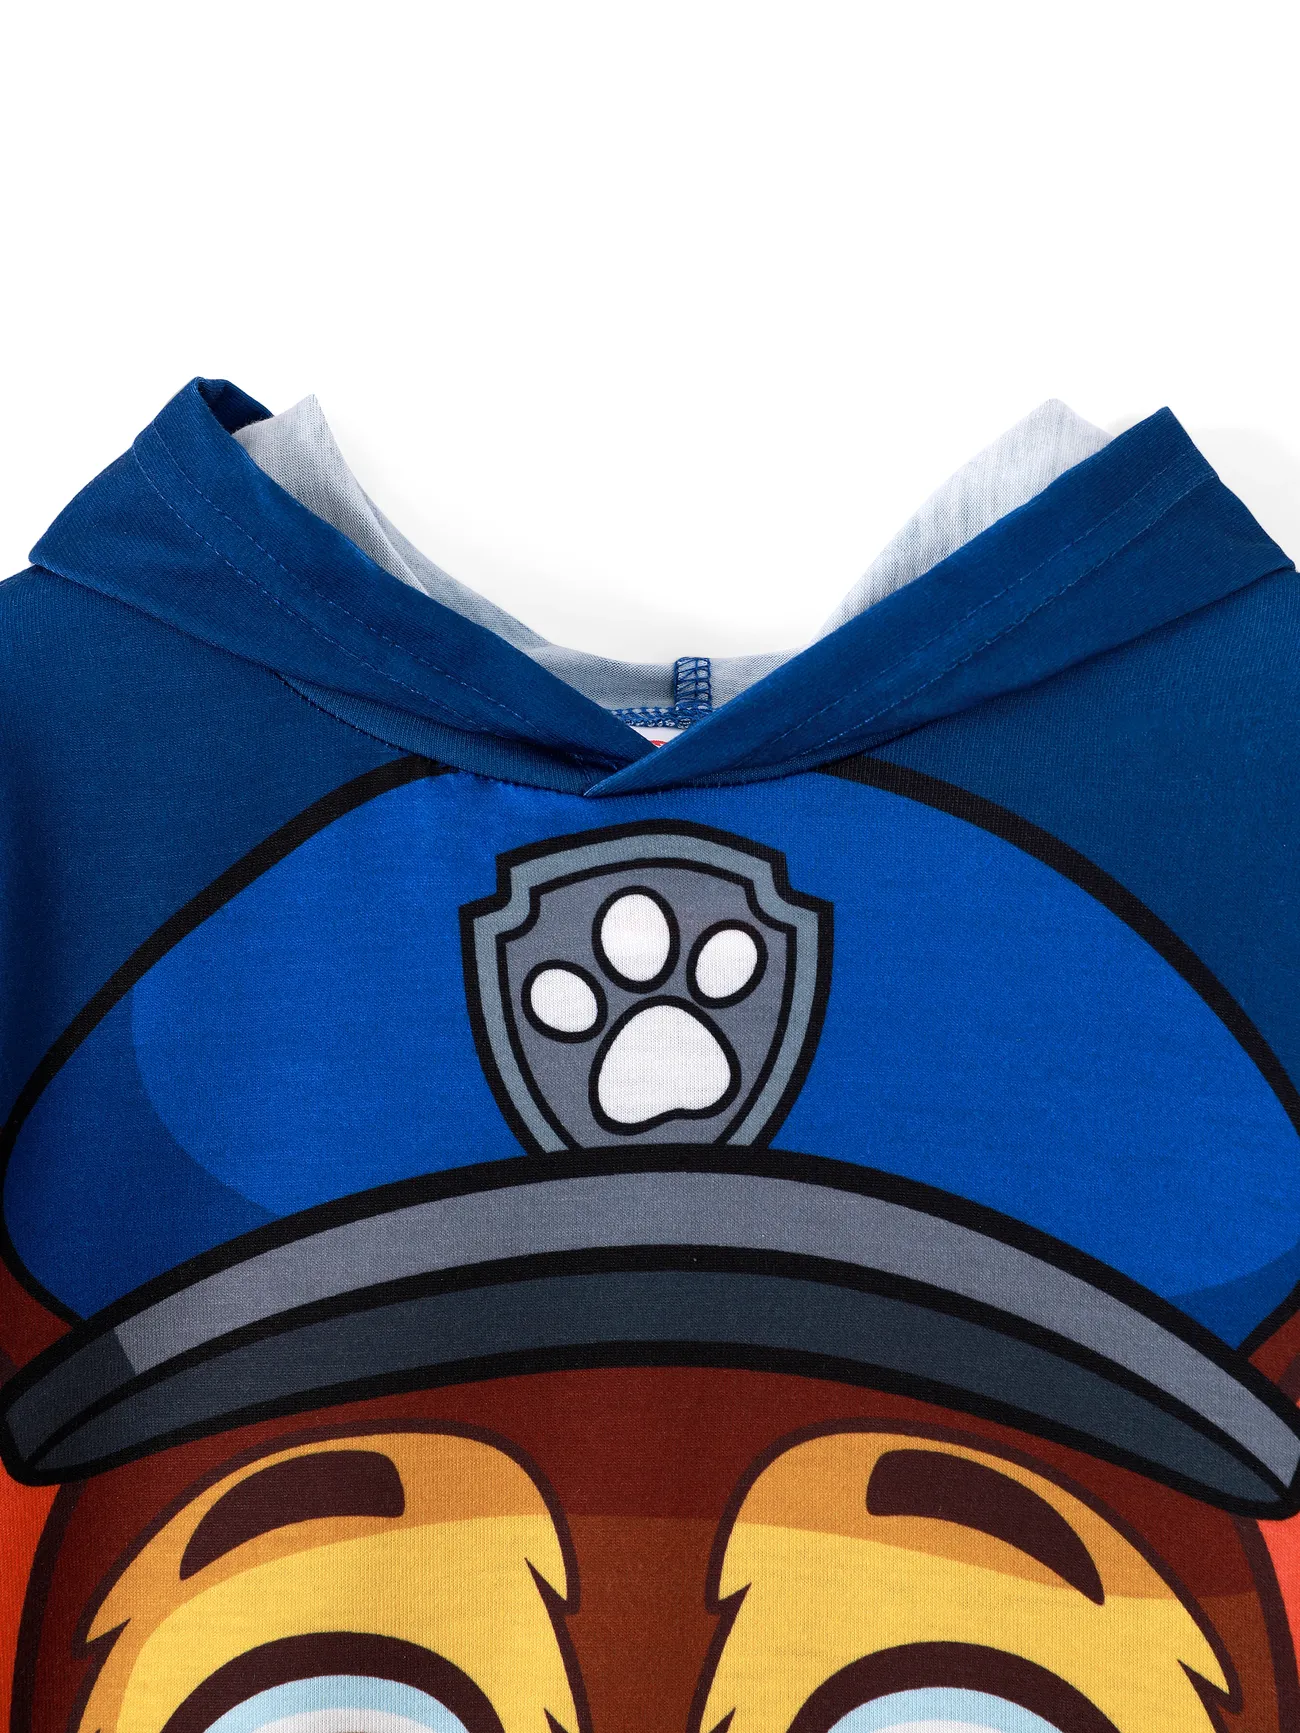 Paw Patrol Toddler Girl/Boy Letter Print Hoodie Sweatshirt Tibetan blue big image 1